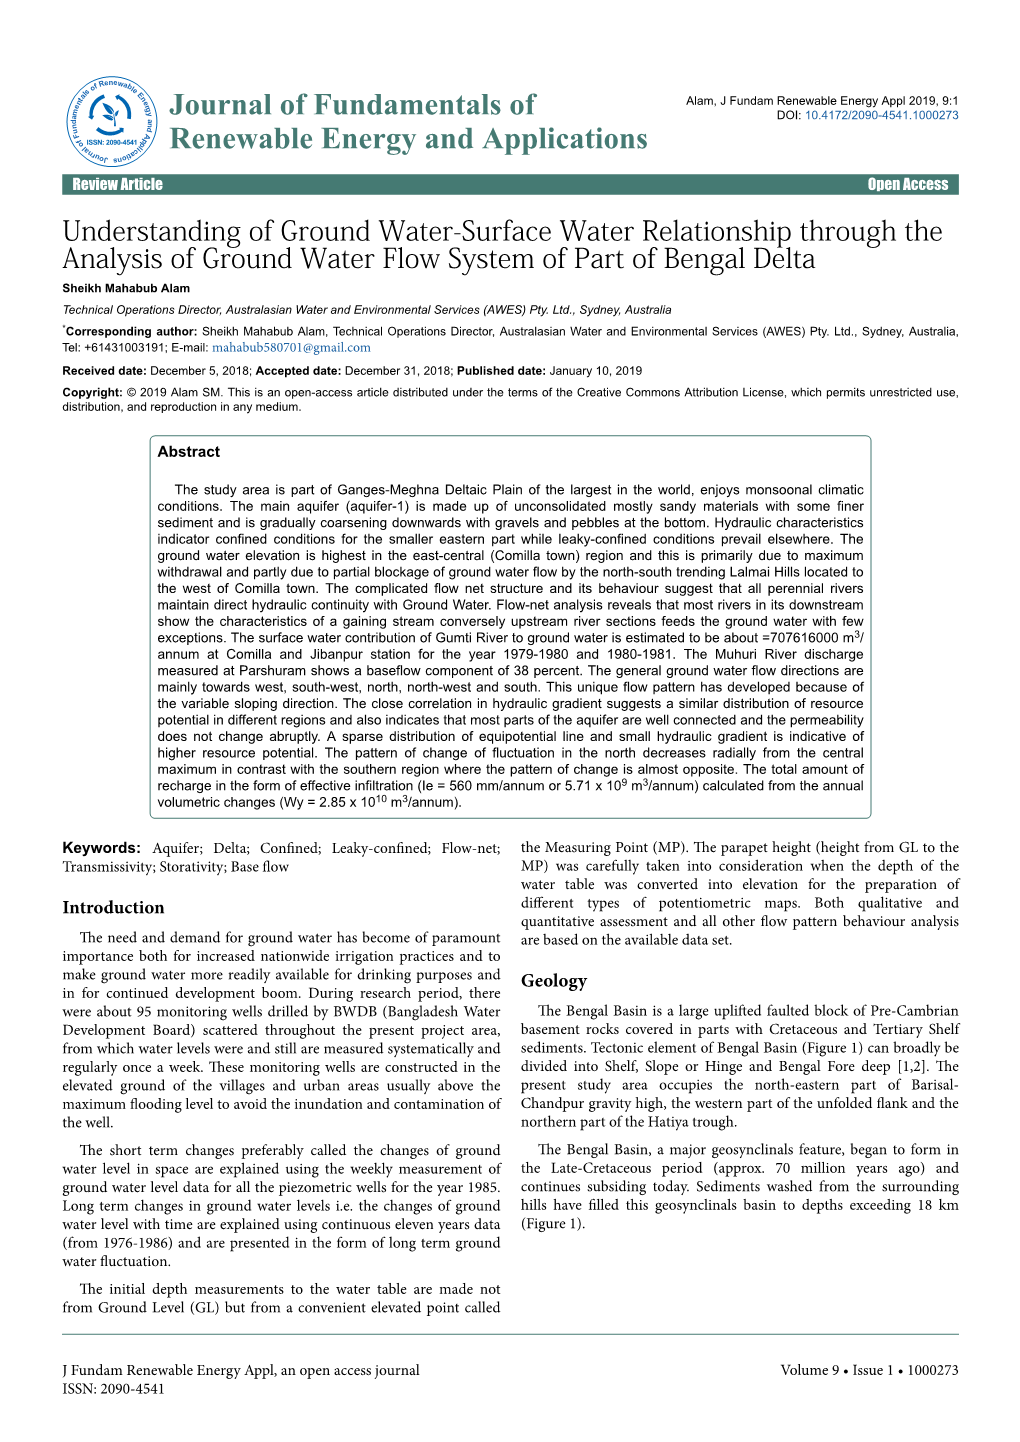 Understanding of Ground Water-Surface Water Relationship